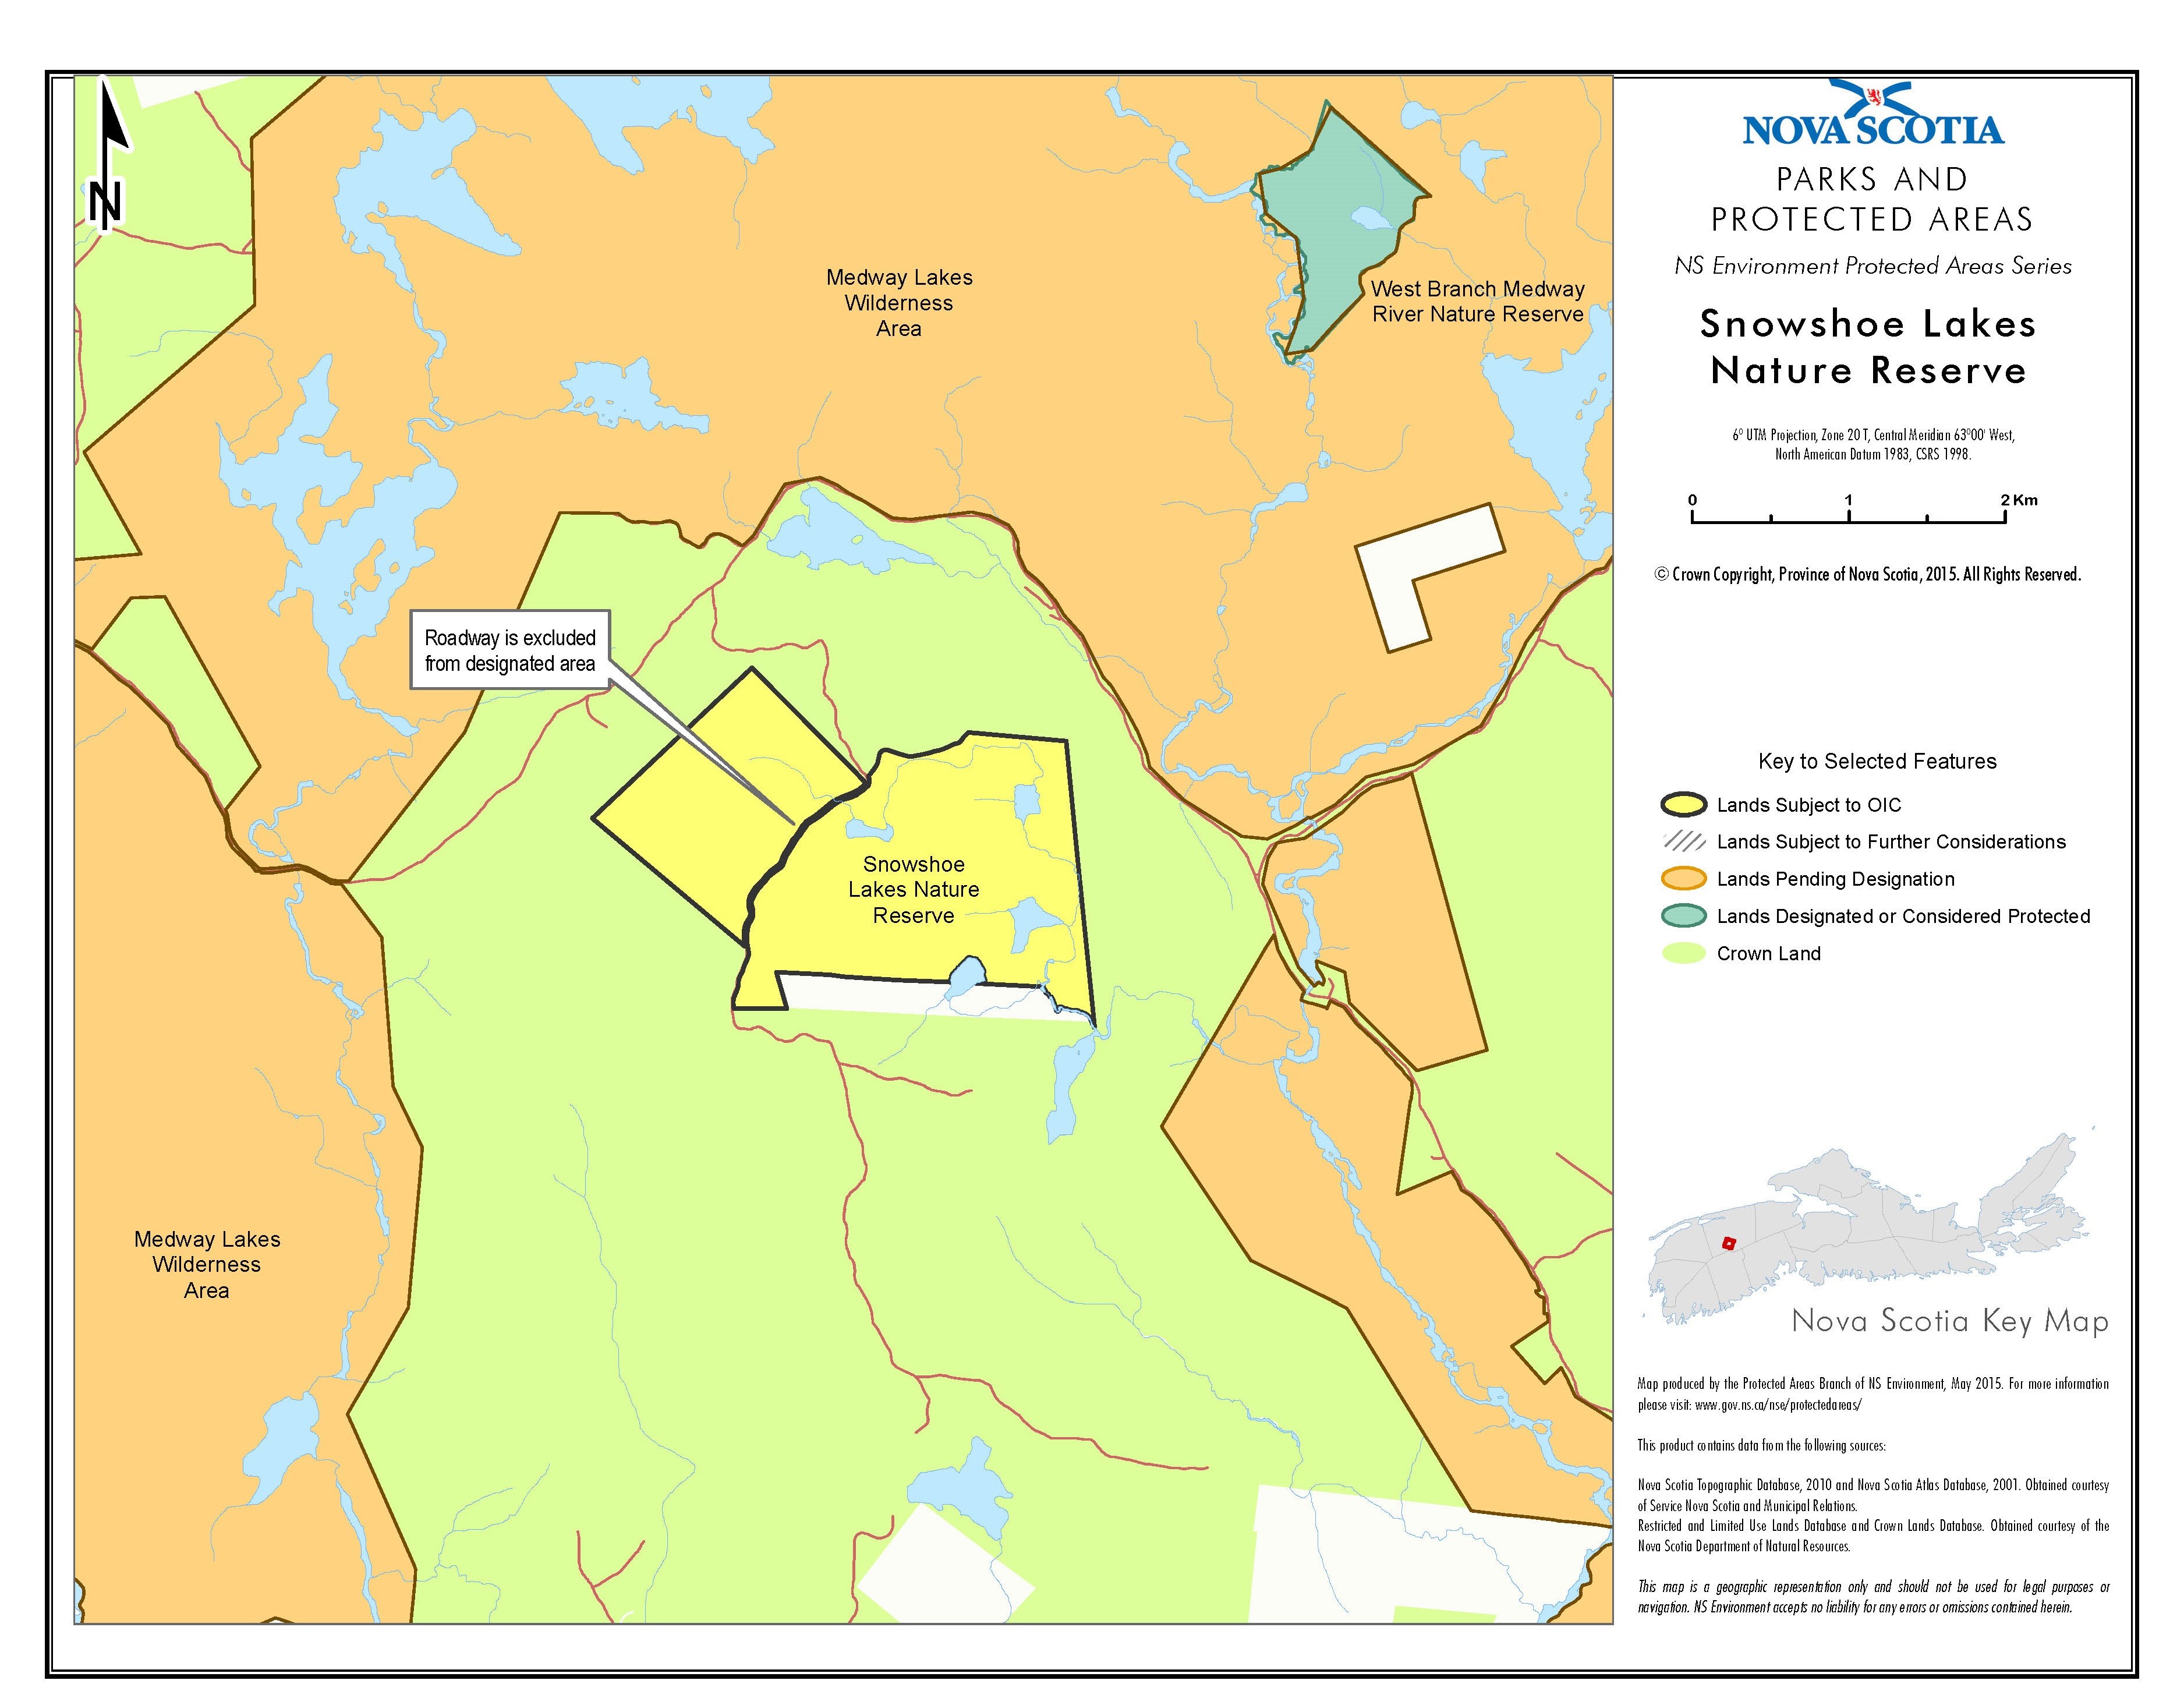 Approximate boundaries of Snowshoe Lakes Nature Reserve